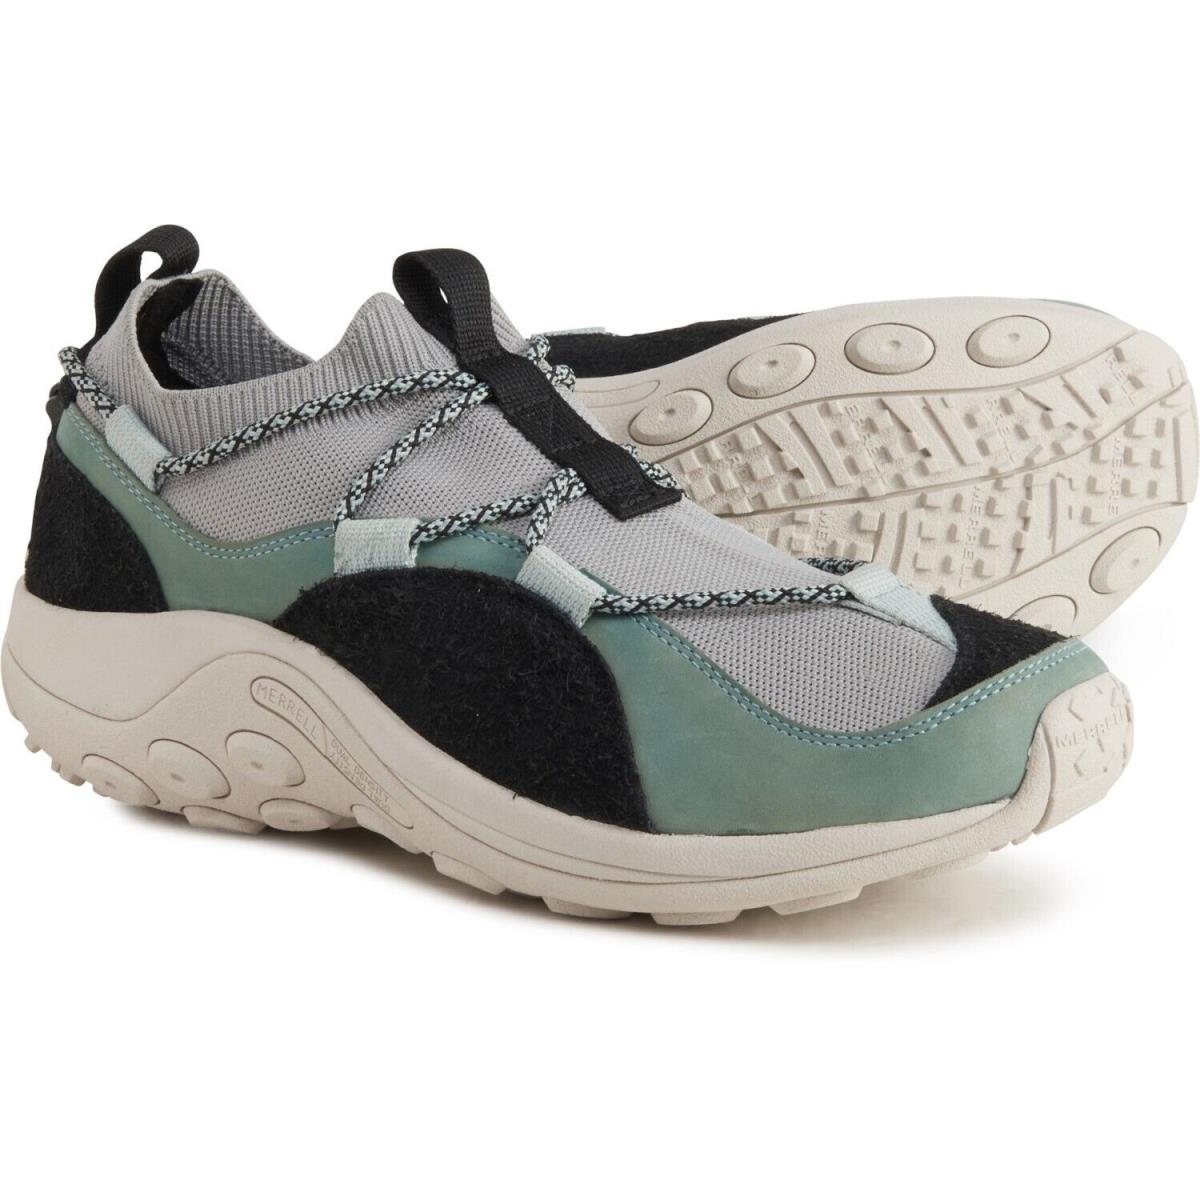 Men`s Merrell Jungle Moc Explorer Slip-ons Shoes Size 10 US Mineral - Multicolor